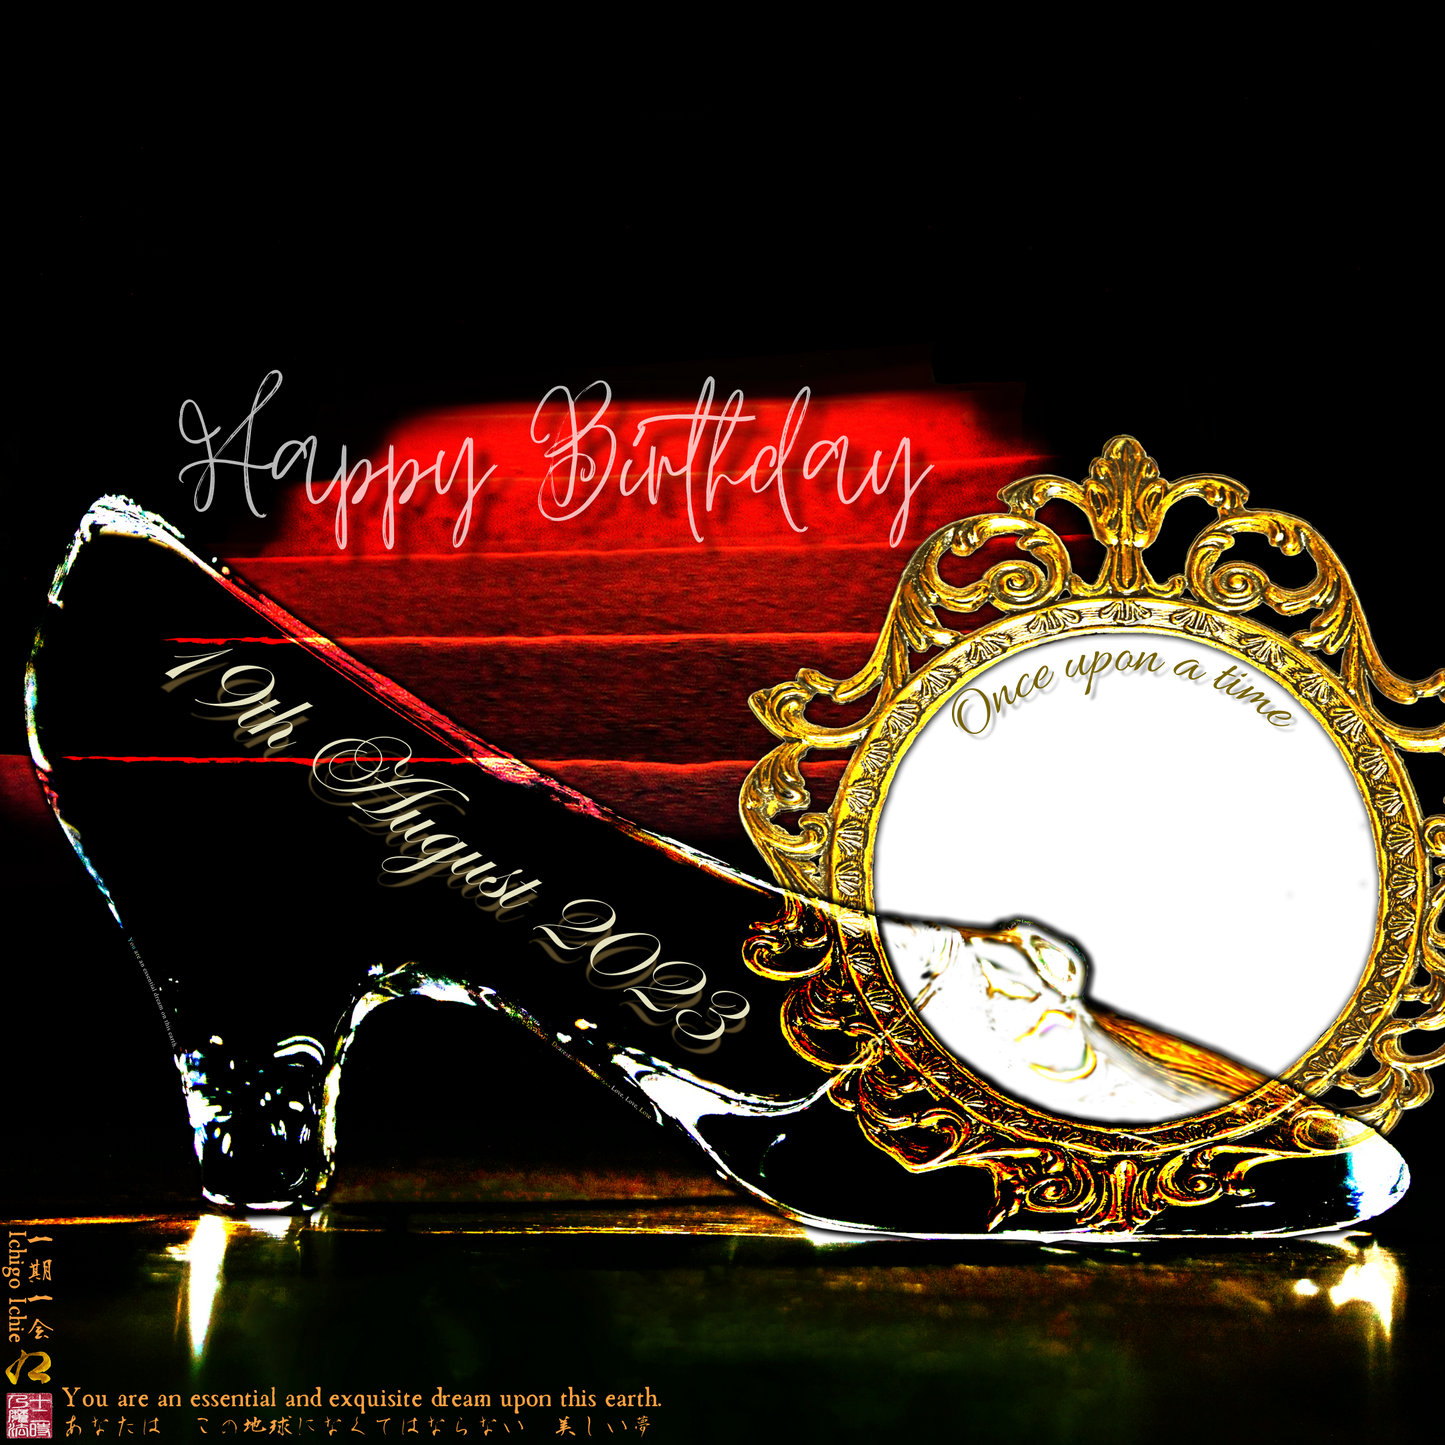 Happy Birthday Glass Slipper "Ichigo Ichie" 19th August 2023 the Right (1-of-1) NFT Art